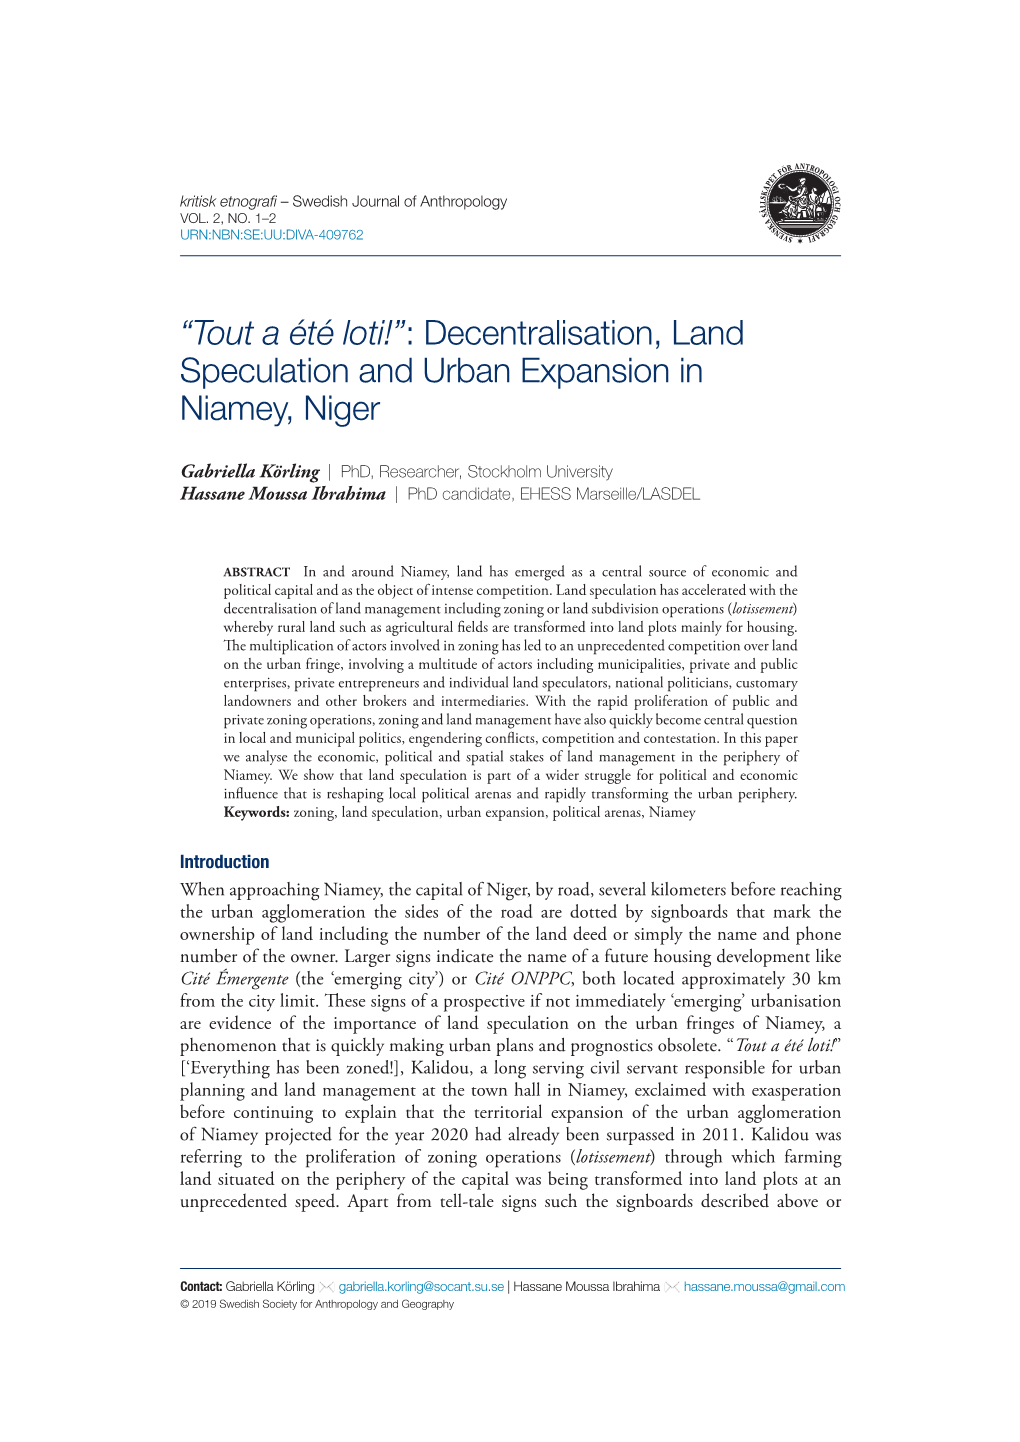 Decentralisation, Land Speculation and Urban Expansion in Niamey, Niger